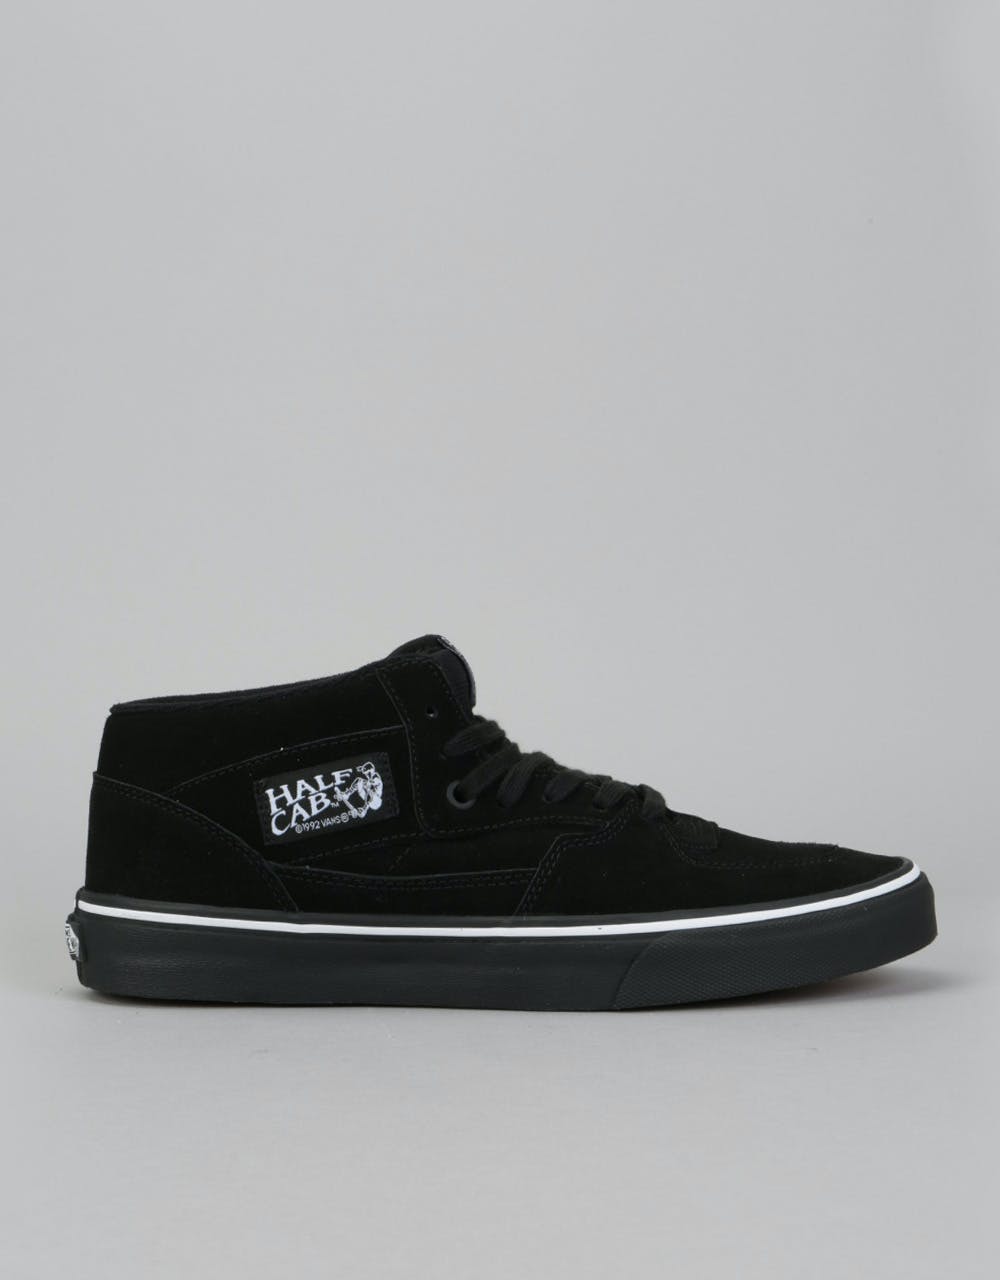 Vans Half Cab Skate Shoes - (Suede) Black/White/Black